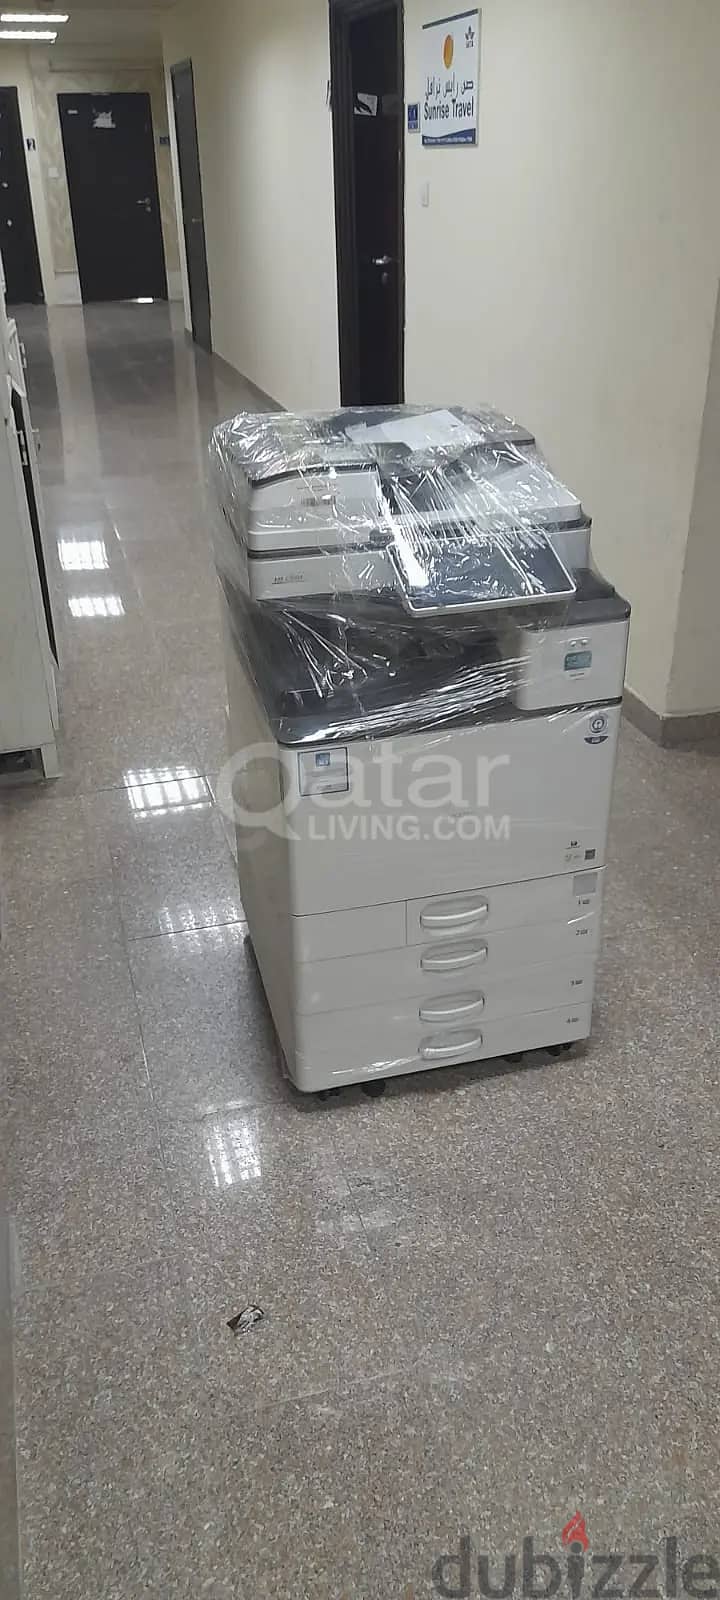 Printer 11